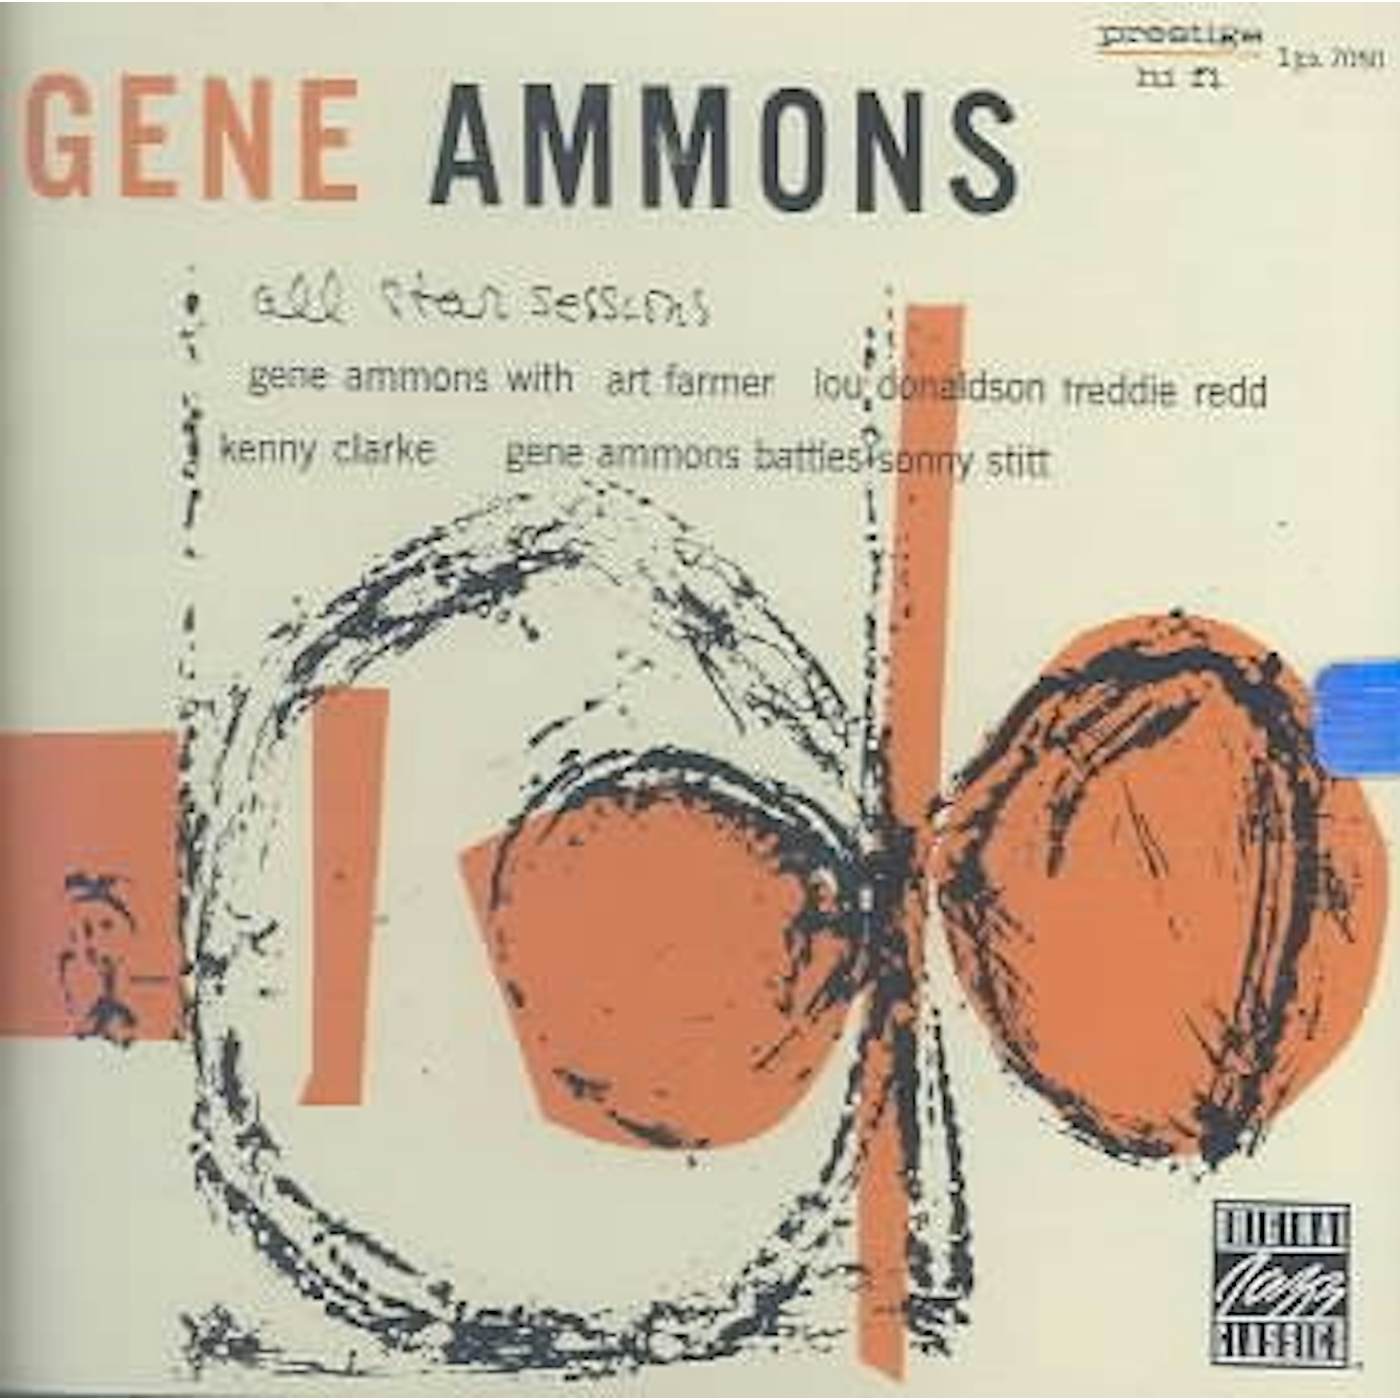 Gene Ammons With Soony Stitt CD